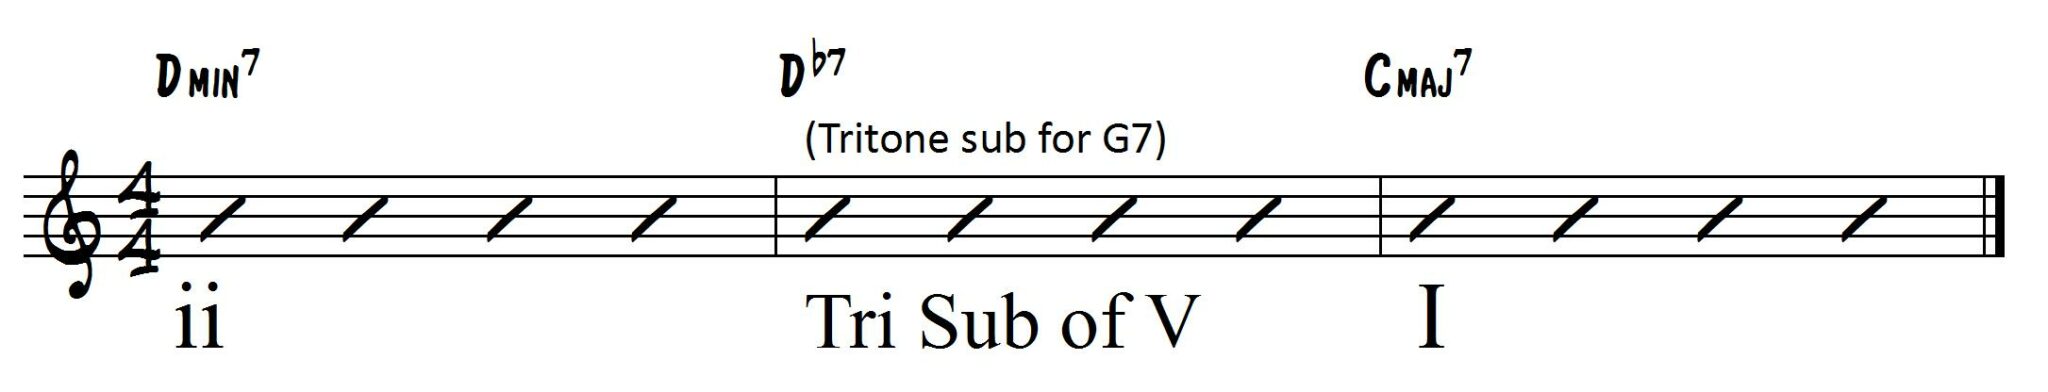 Tritone Sub of V Jazz Chord Progression